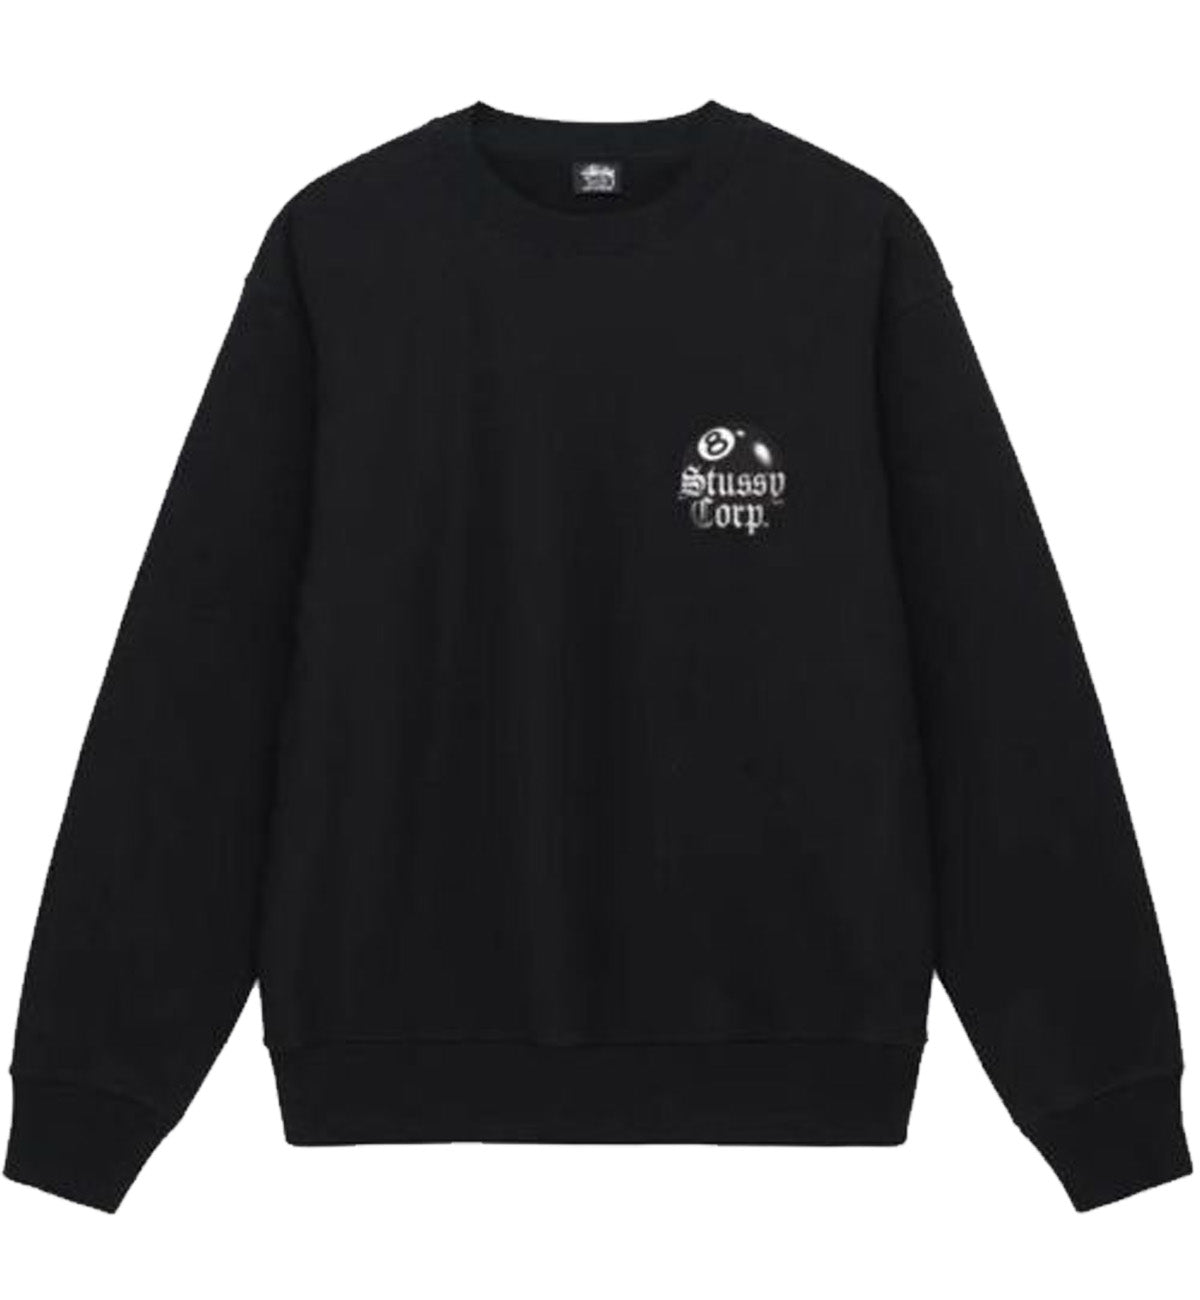 Stussy 8 Ball Corp Sweatshirt (Black)